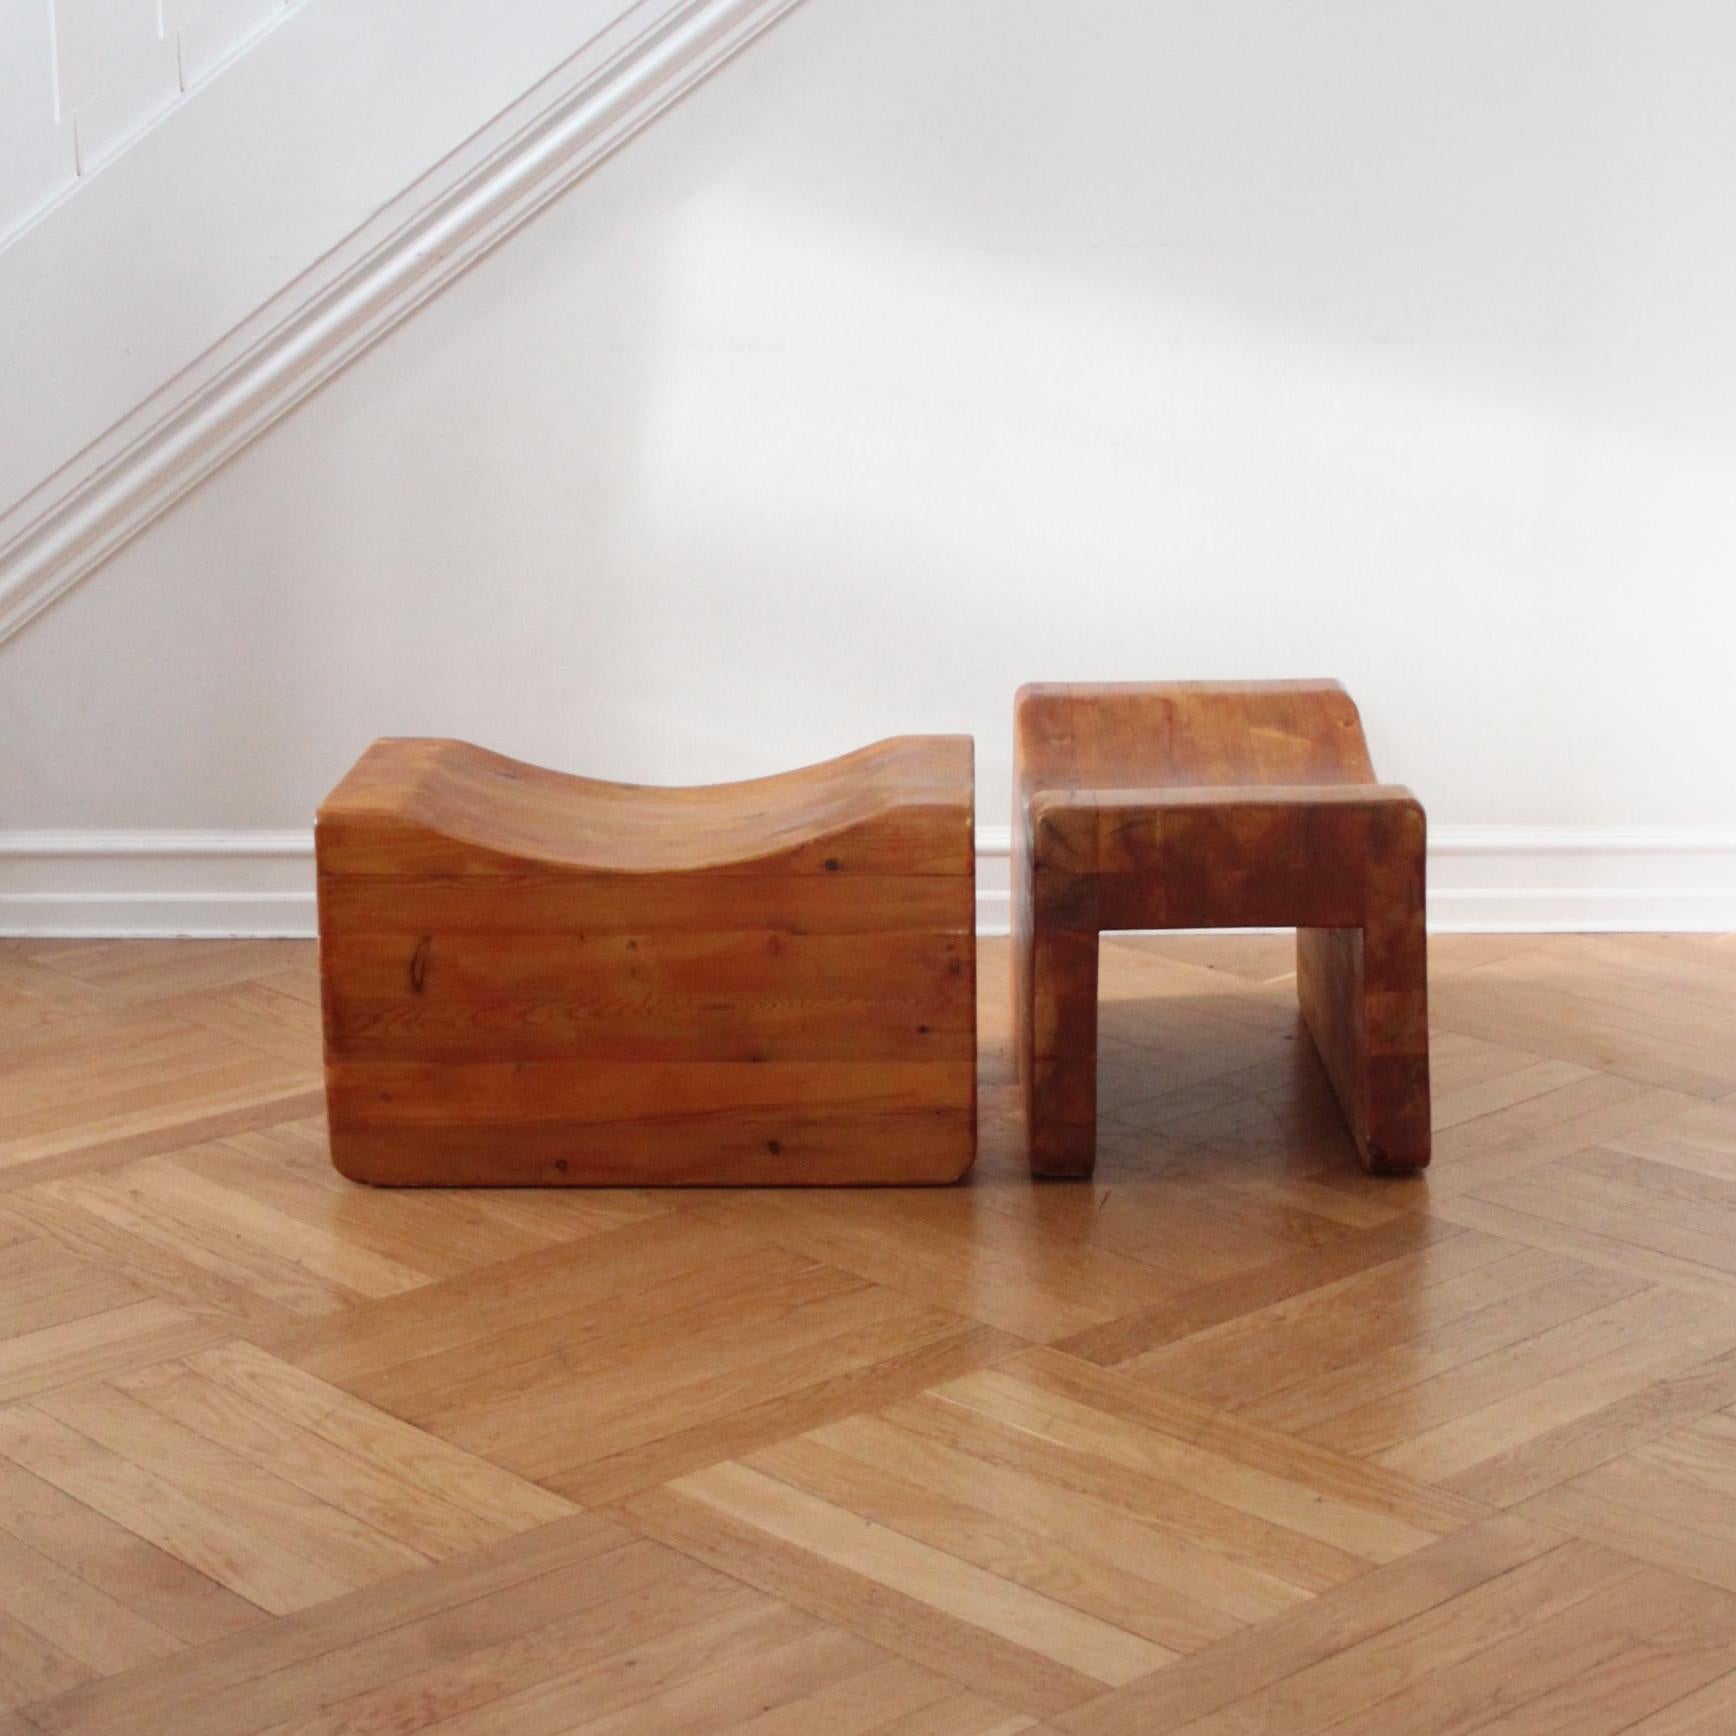 K.J. Petterson & Söner, Pair of Stools in Pine, Scandinavian Modern Design In Good Condition For Sale In Copenhagen, DK